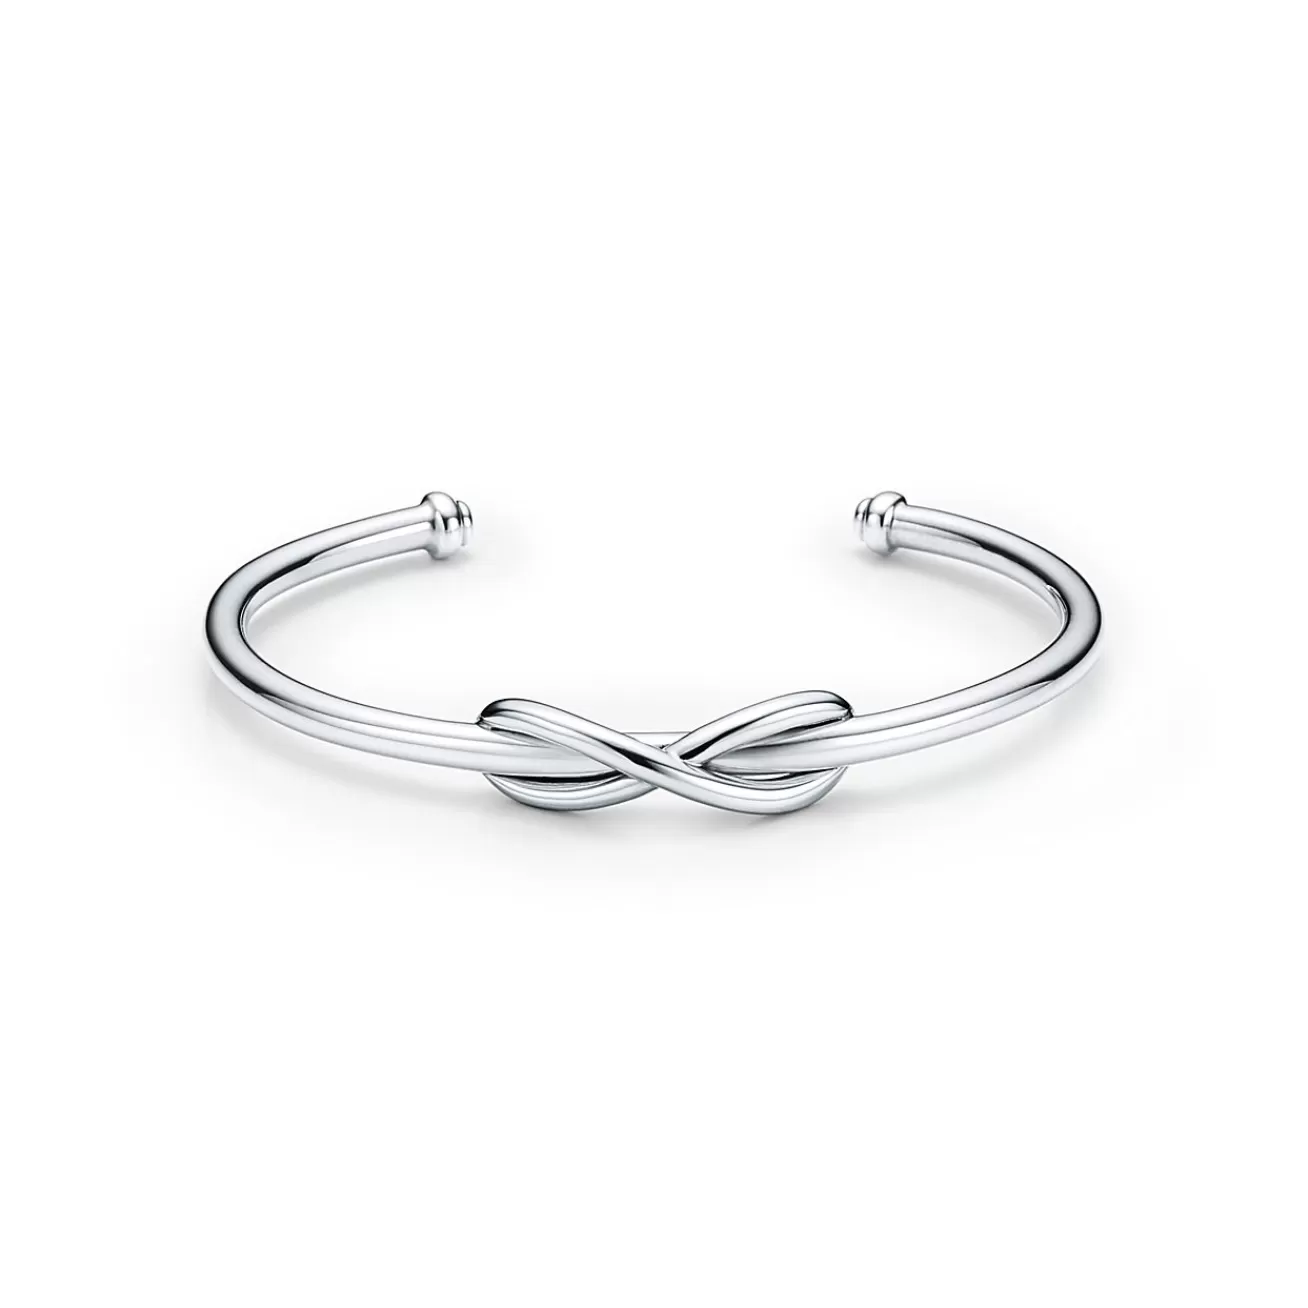 Tiffany & Co. Tiffany Infinity cuff in sterling silver, medium. | ^ Bracelets | Sterling Silver Jewelry